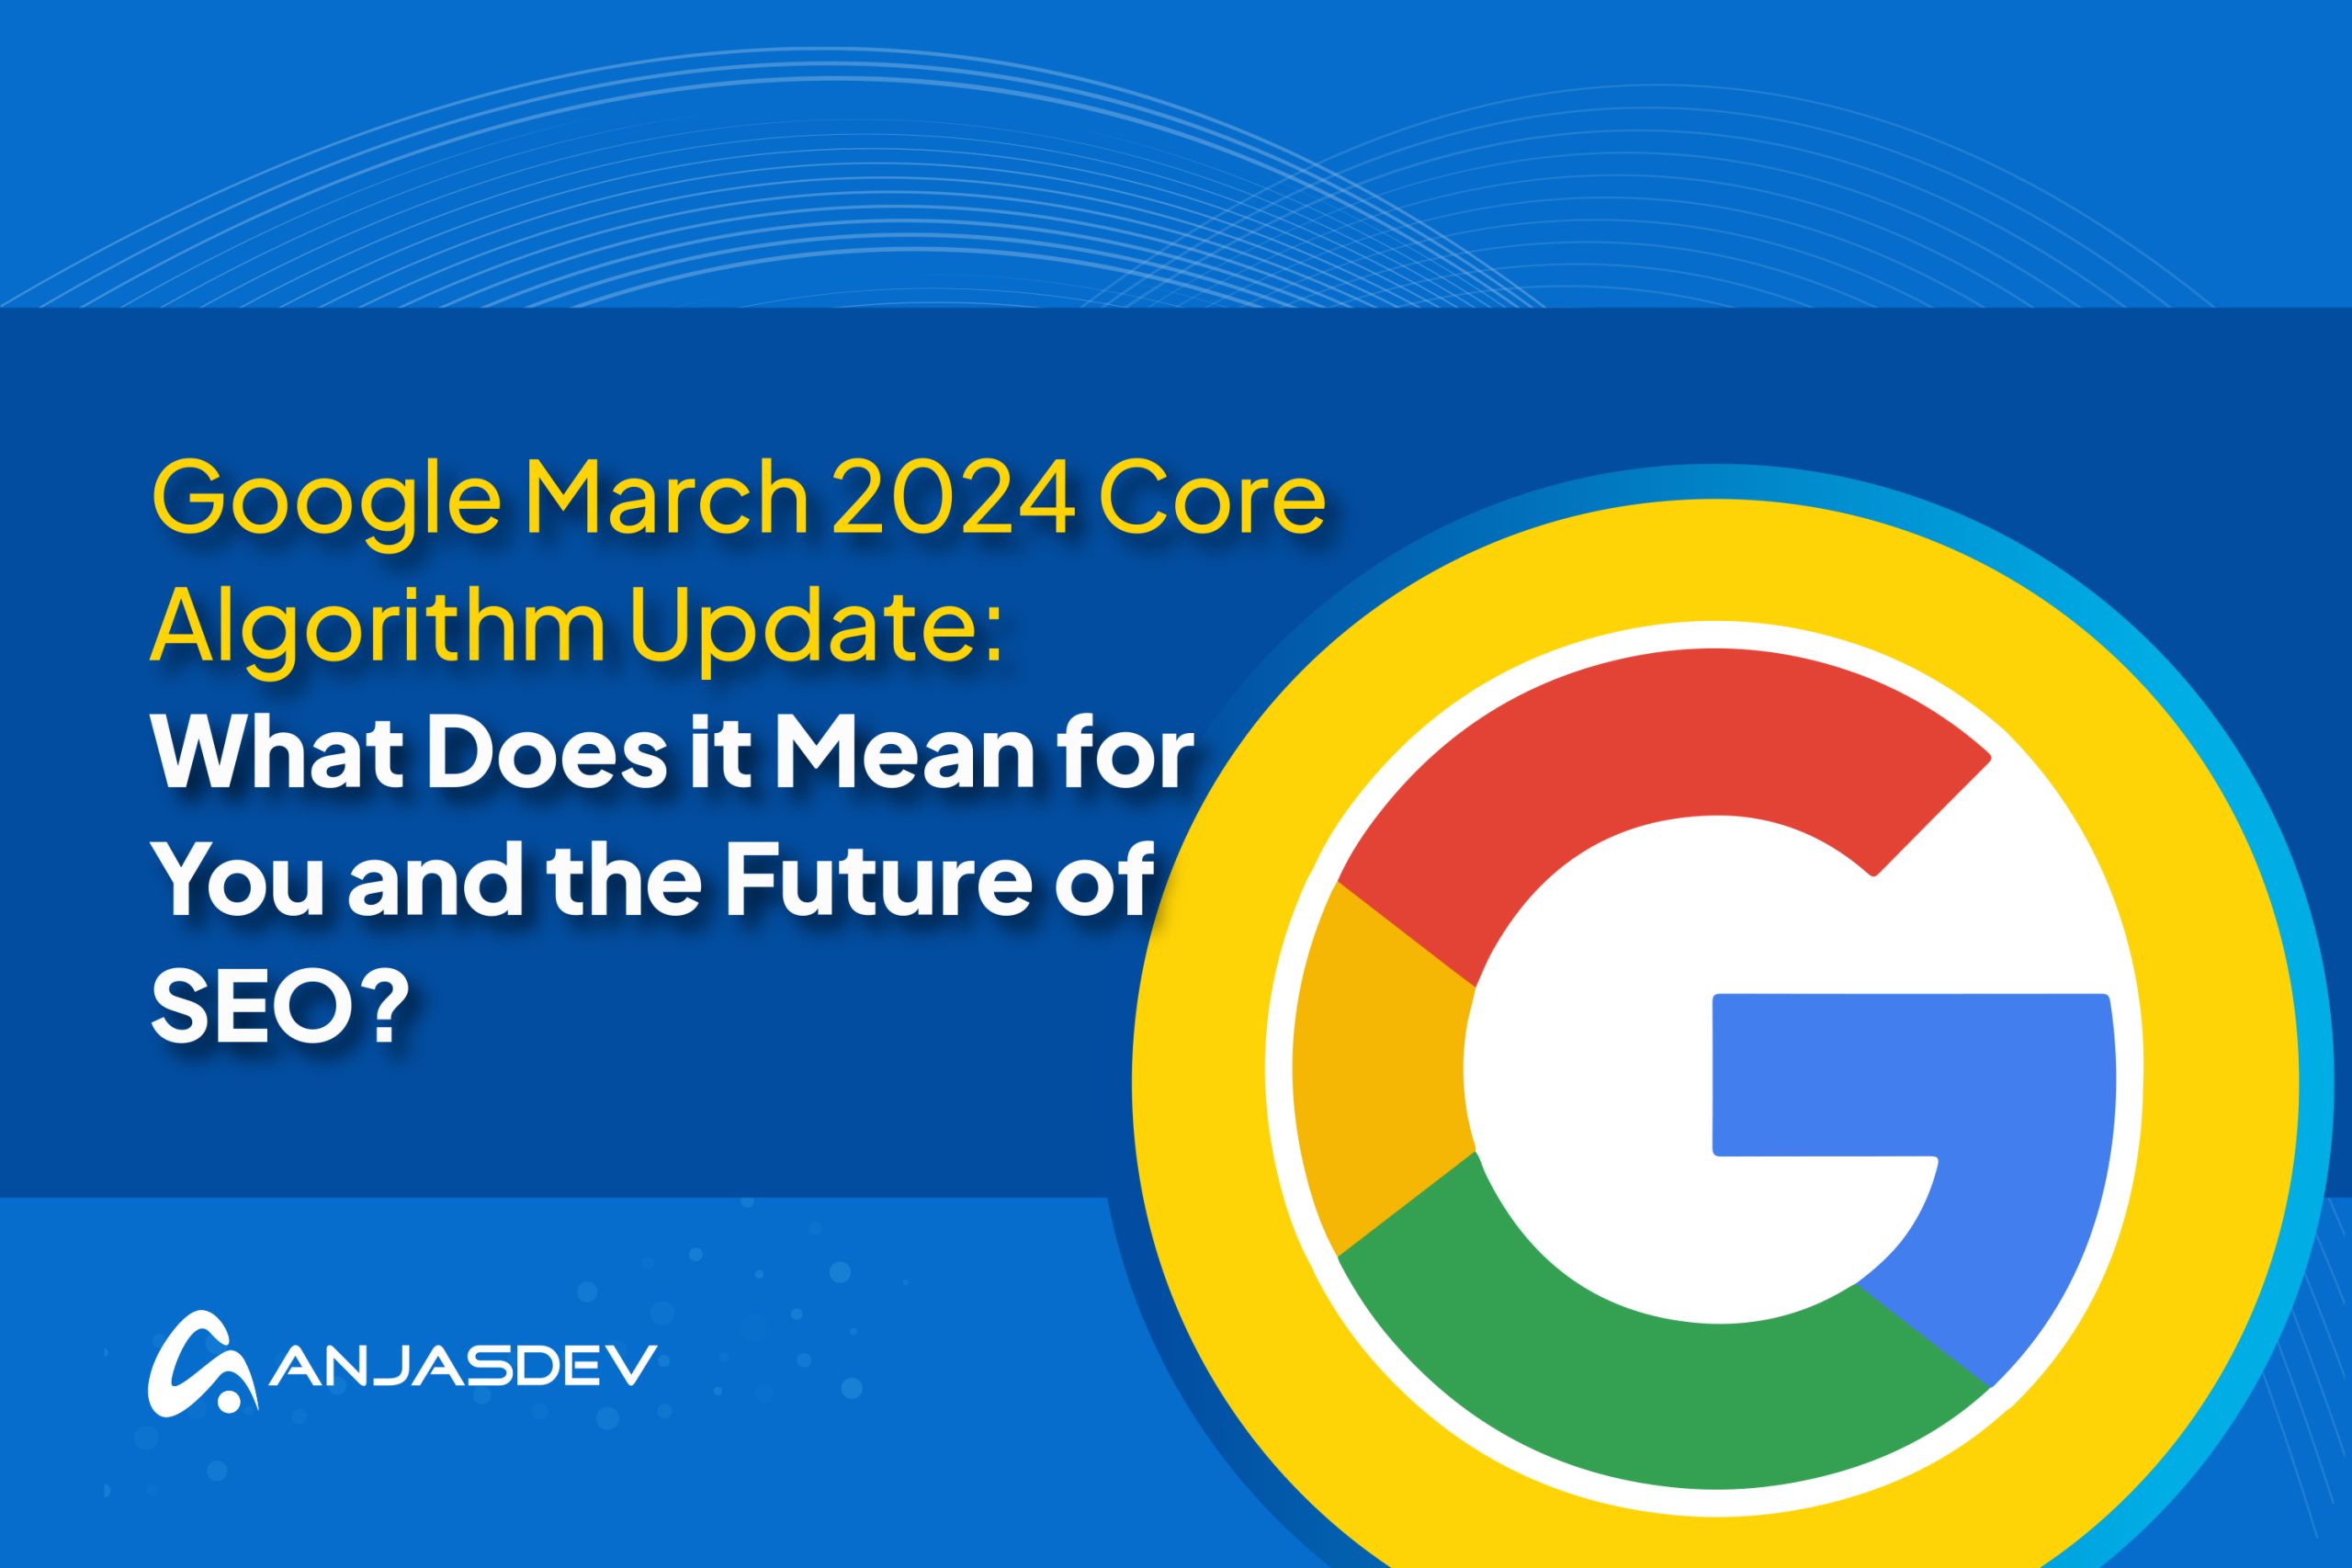 Google March 2024 Core Algorithm Update and Future of SEO AnjasDev